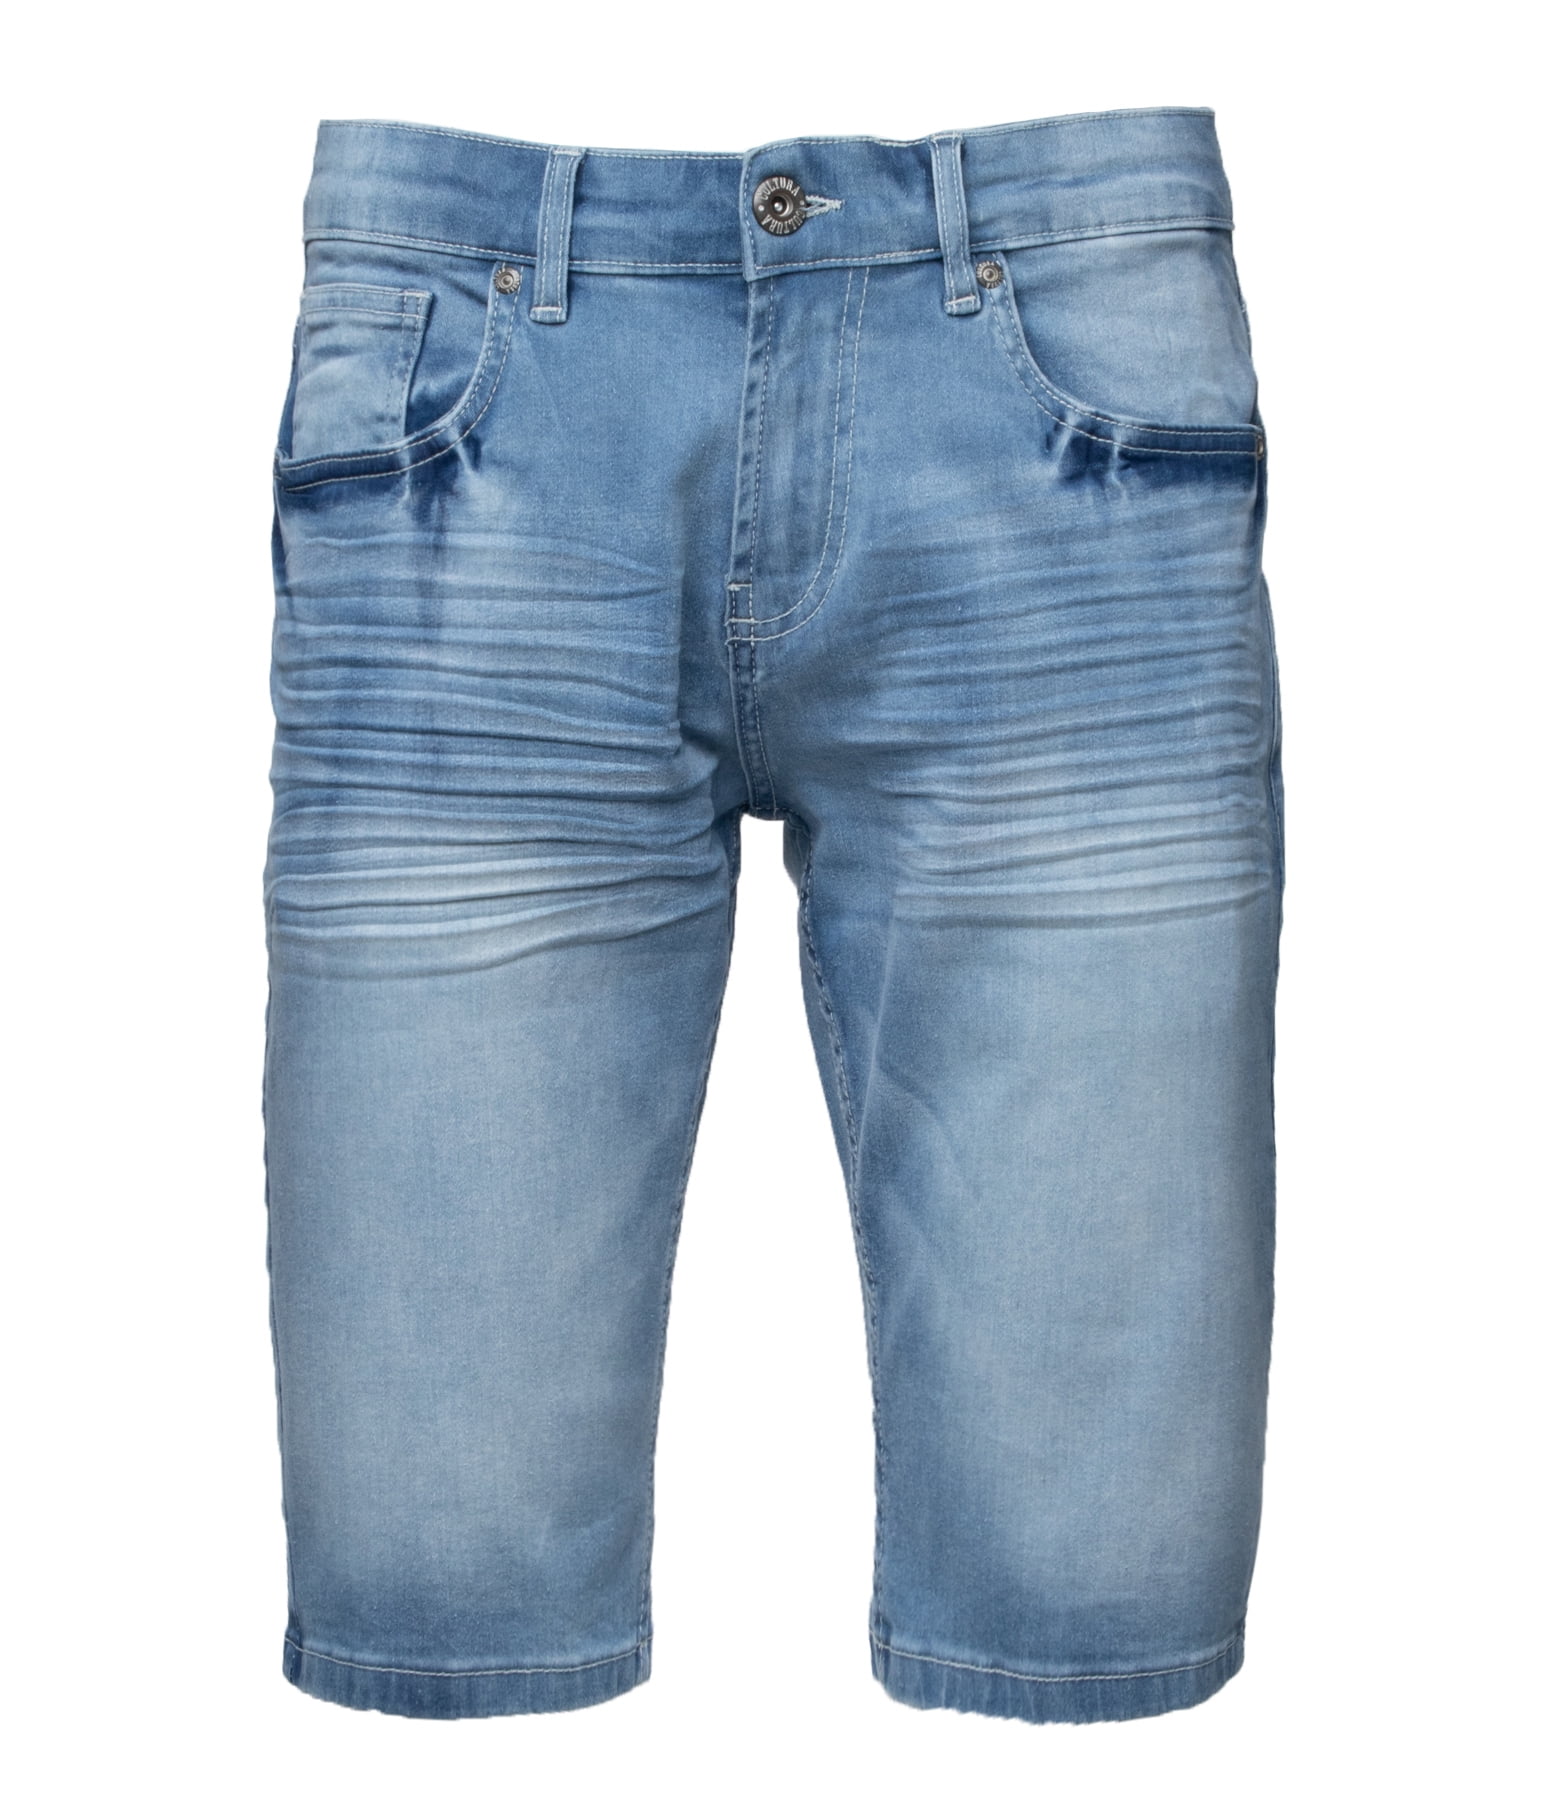 Men's Flex Stretch Slim Skinny Fit Casual Jeans Shorts, Light Blue Wash (White Stitch), Size 34 - Walmart.com